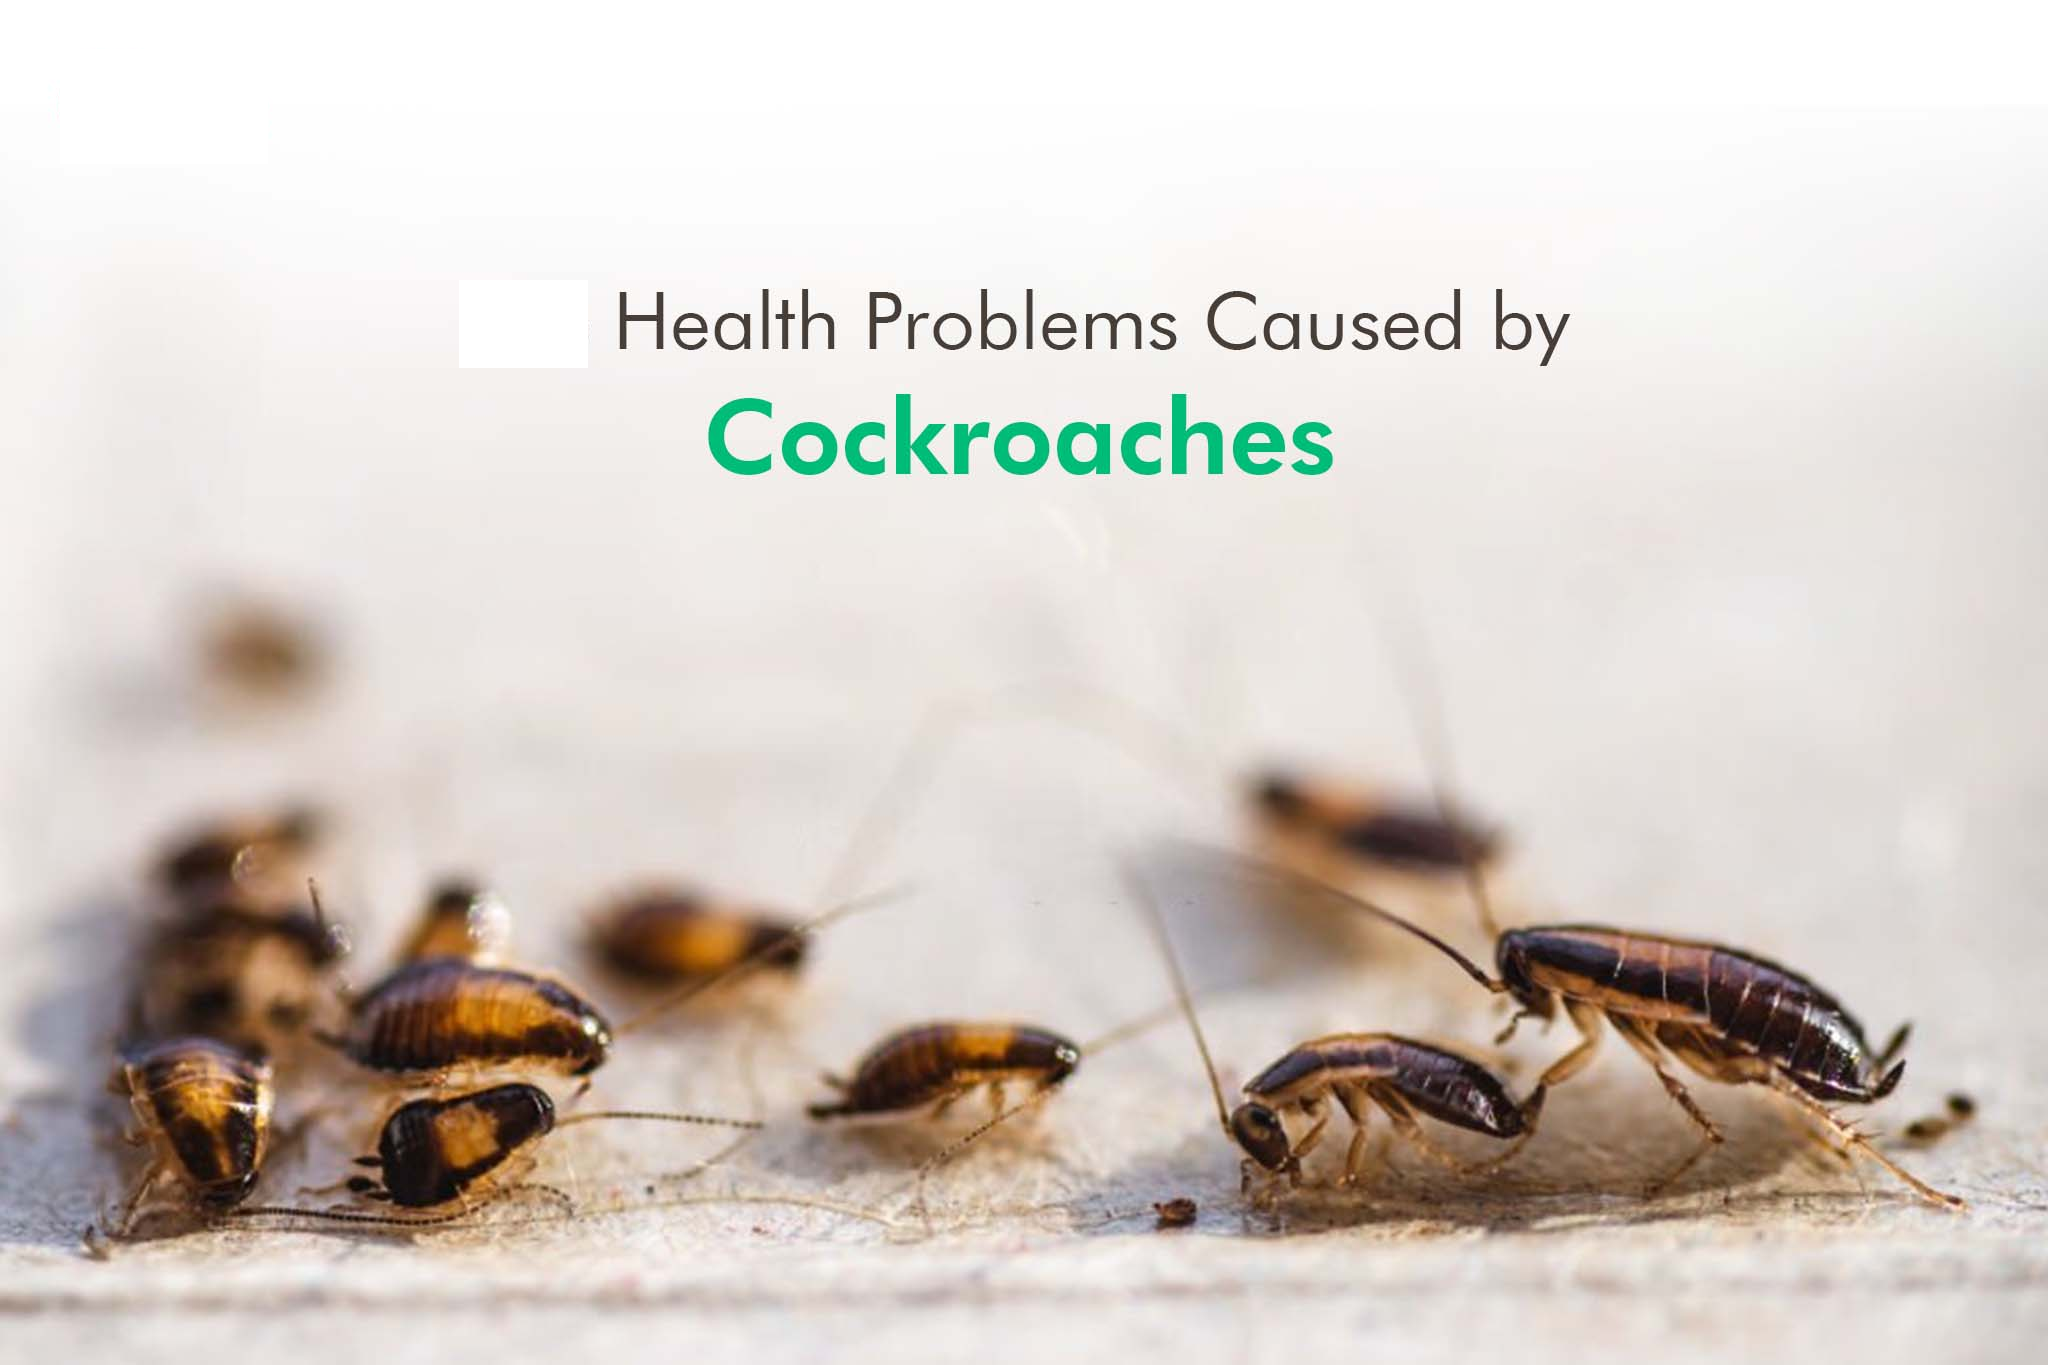 cockroach diseases impact on health